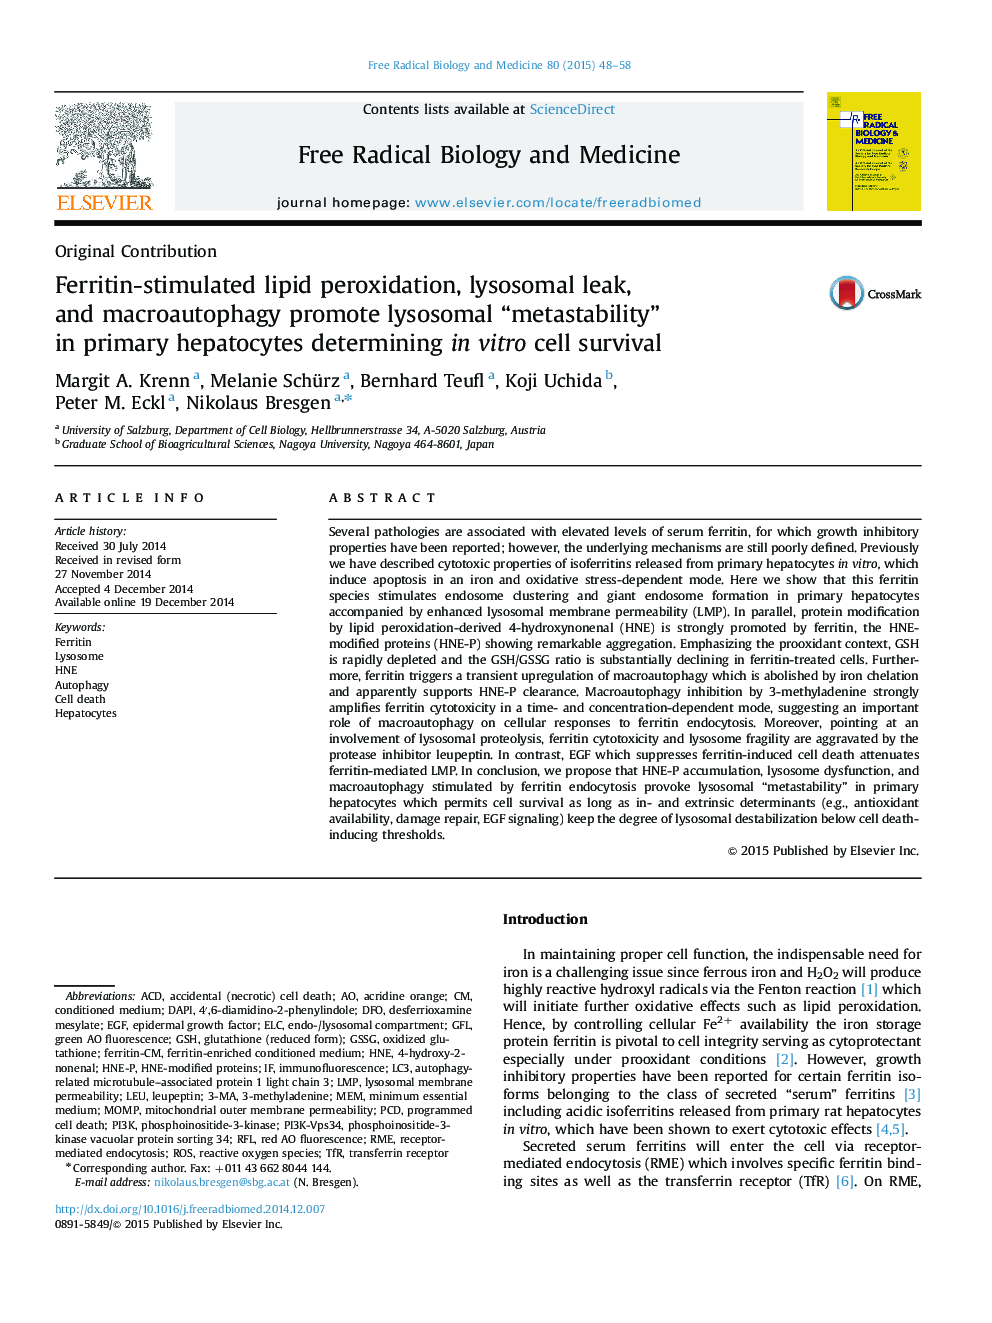 Ferritin-stimulated lipid peroxidation, lysosomal leak, and macroautophagy promote lysosomal “metastability” in primary hepatocytes determining in vitro cell survival